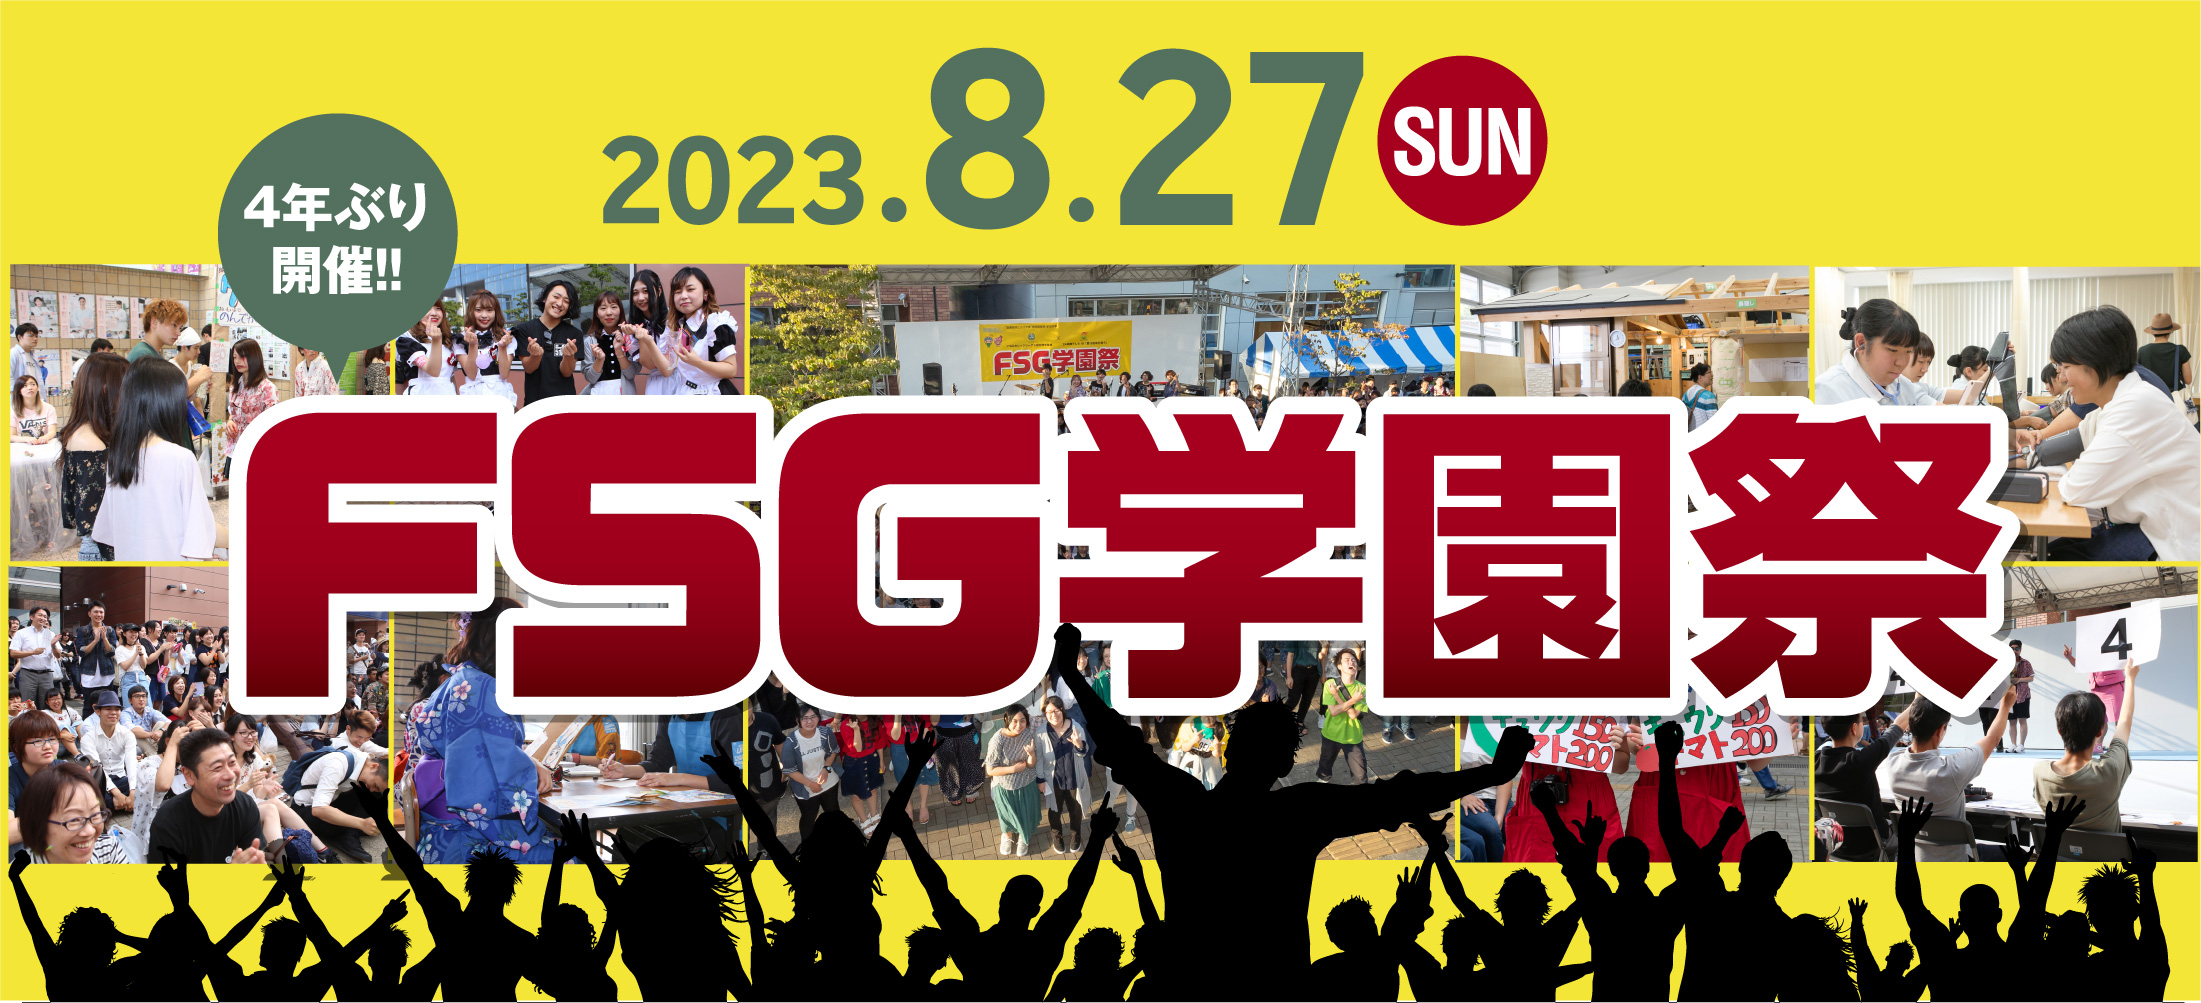 2023.8.7(sun) FSG学園祭